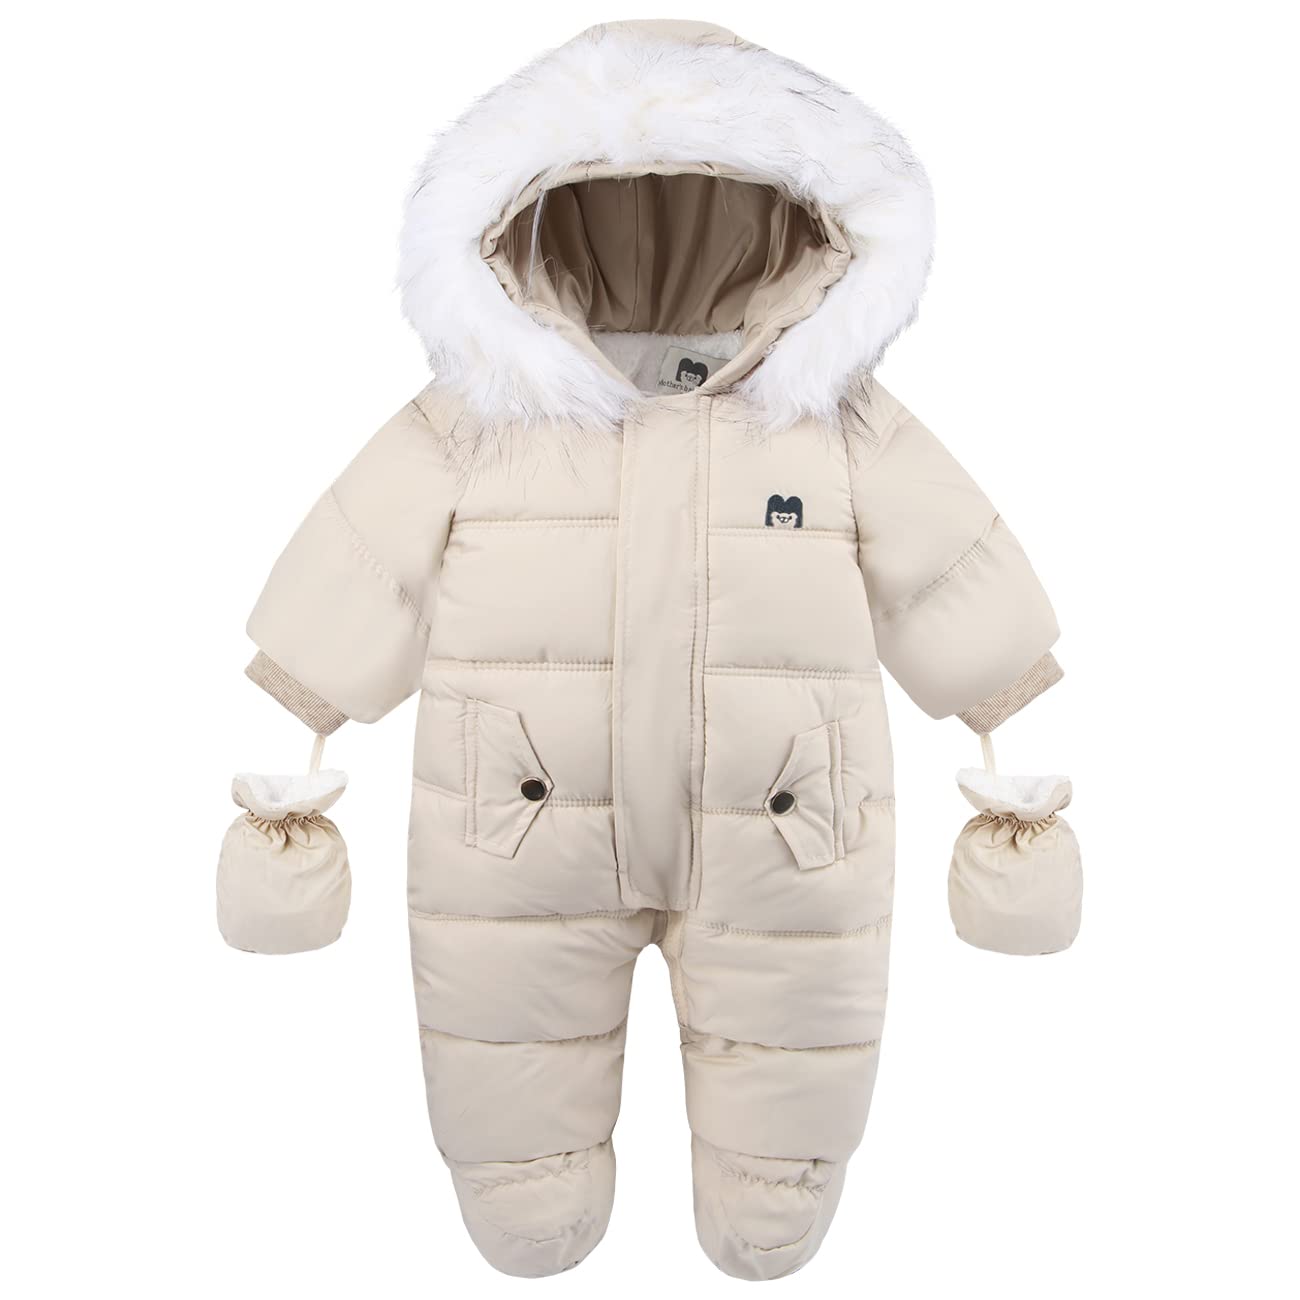 Tumaron Toddler Snowsuit Baby Girls Winter Clothes Bear Coat 2T Boys Jacket 18-24 Months